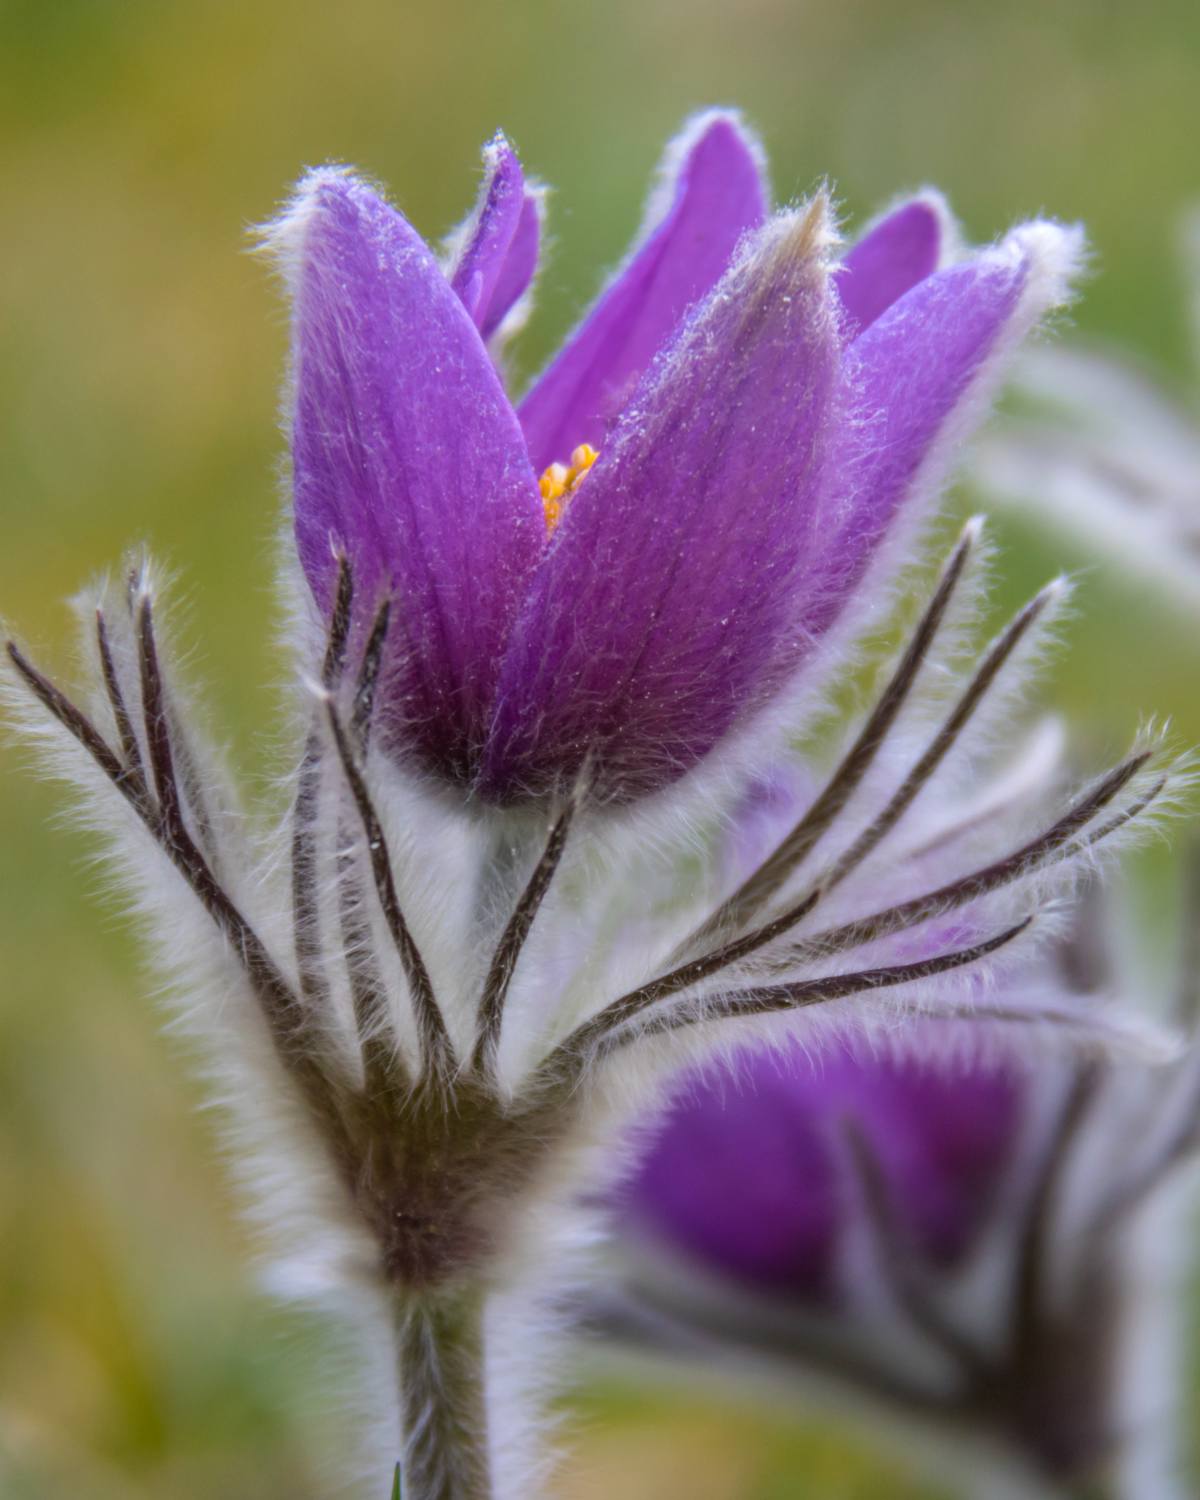 Violet pasqueflower opening up